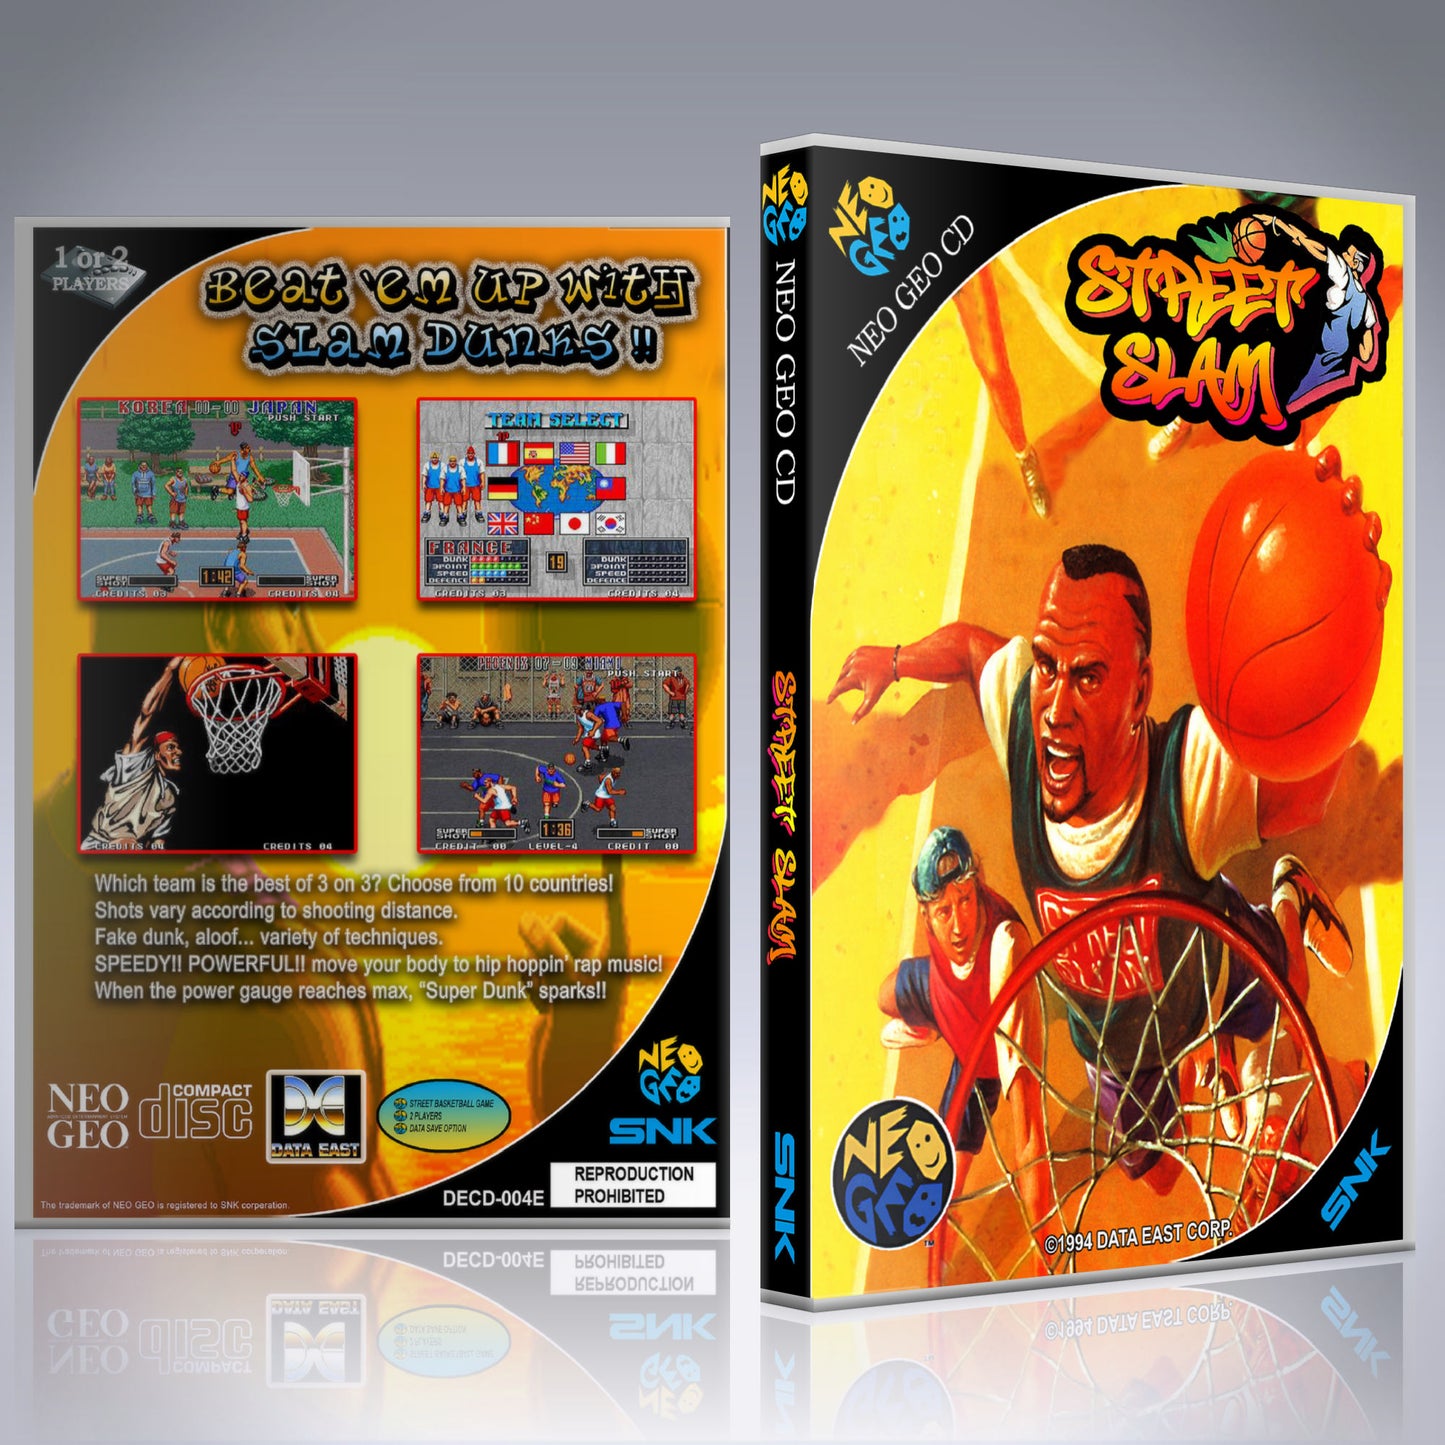 NeoGeo CD Custom Case - NO GAME - Street Slam